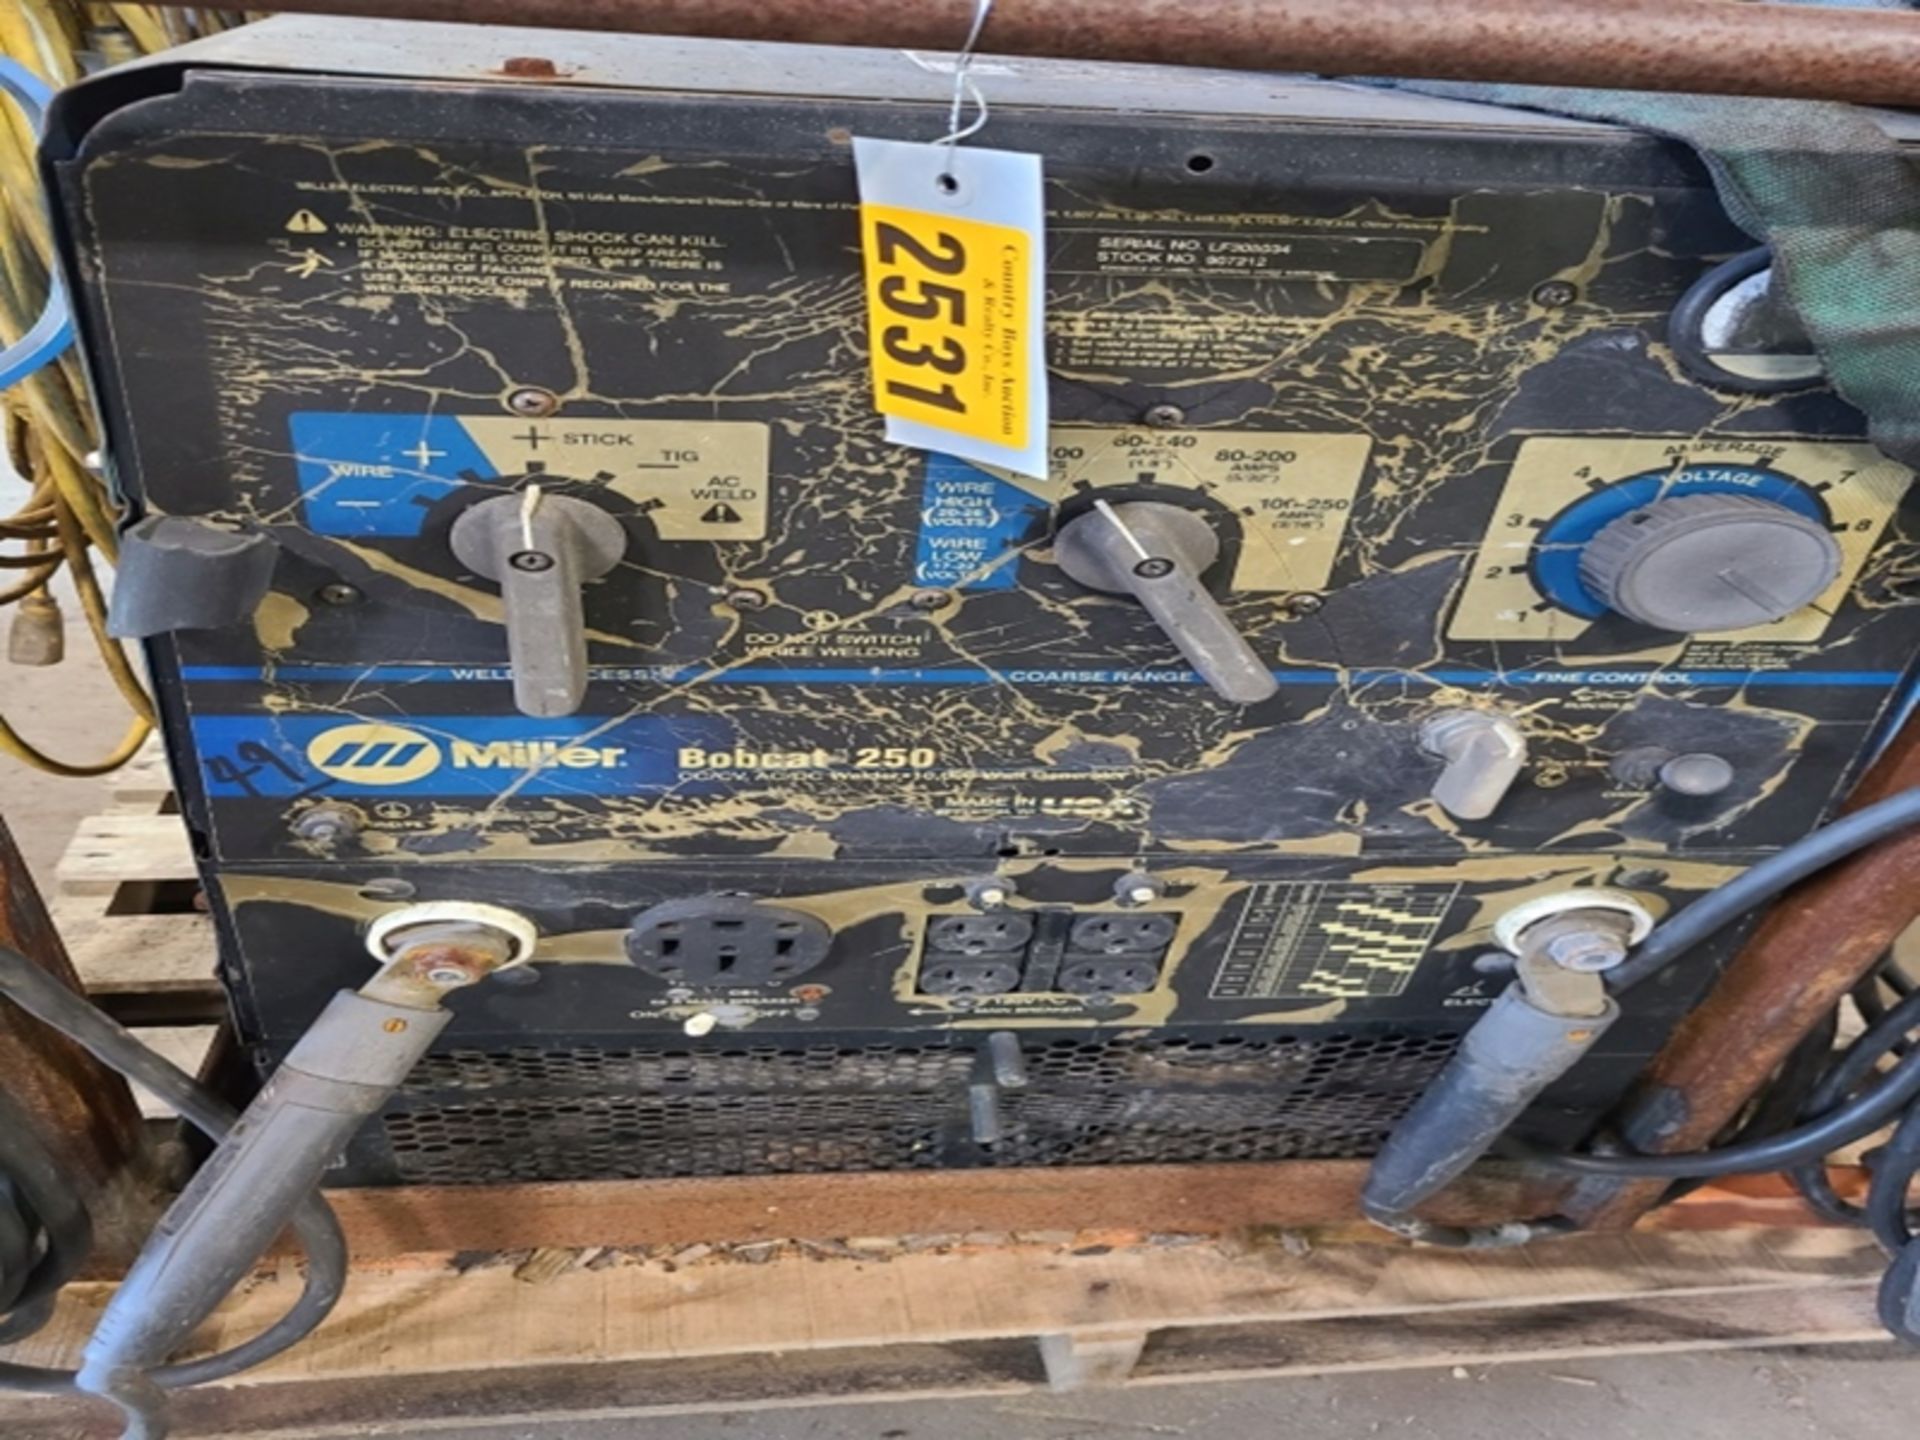 Miller Bobcat 250 AC/DC welder 10K generator ser# LF305304 stock no 907212 hrs unknown - Image 2 of 3